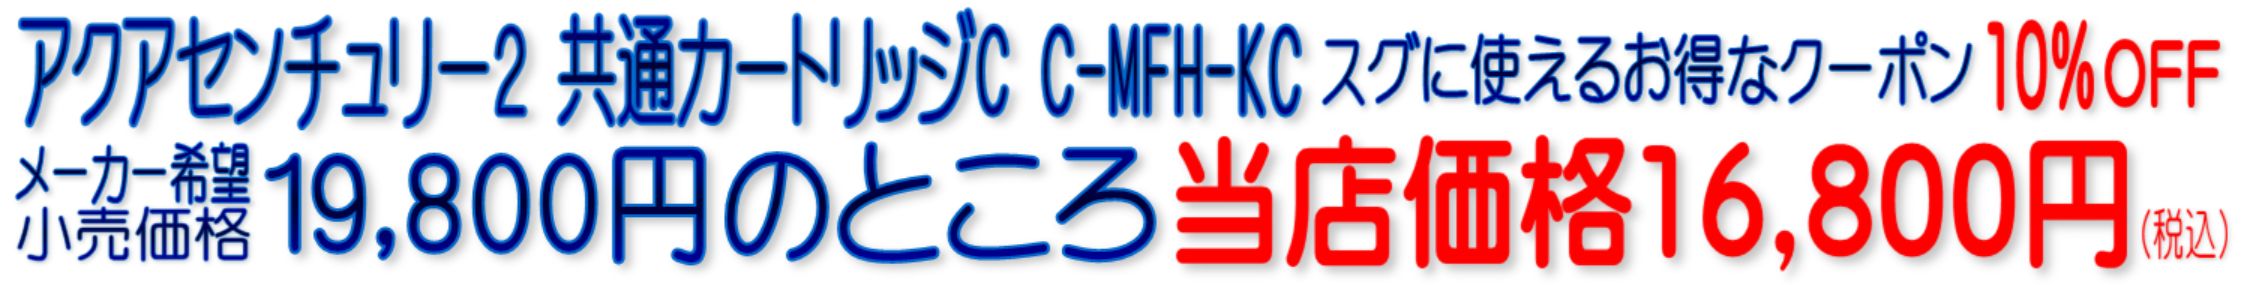 MFH-113 C-MFH-KC アクアセンチュリー2